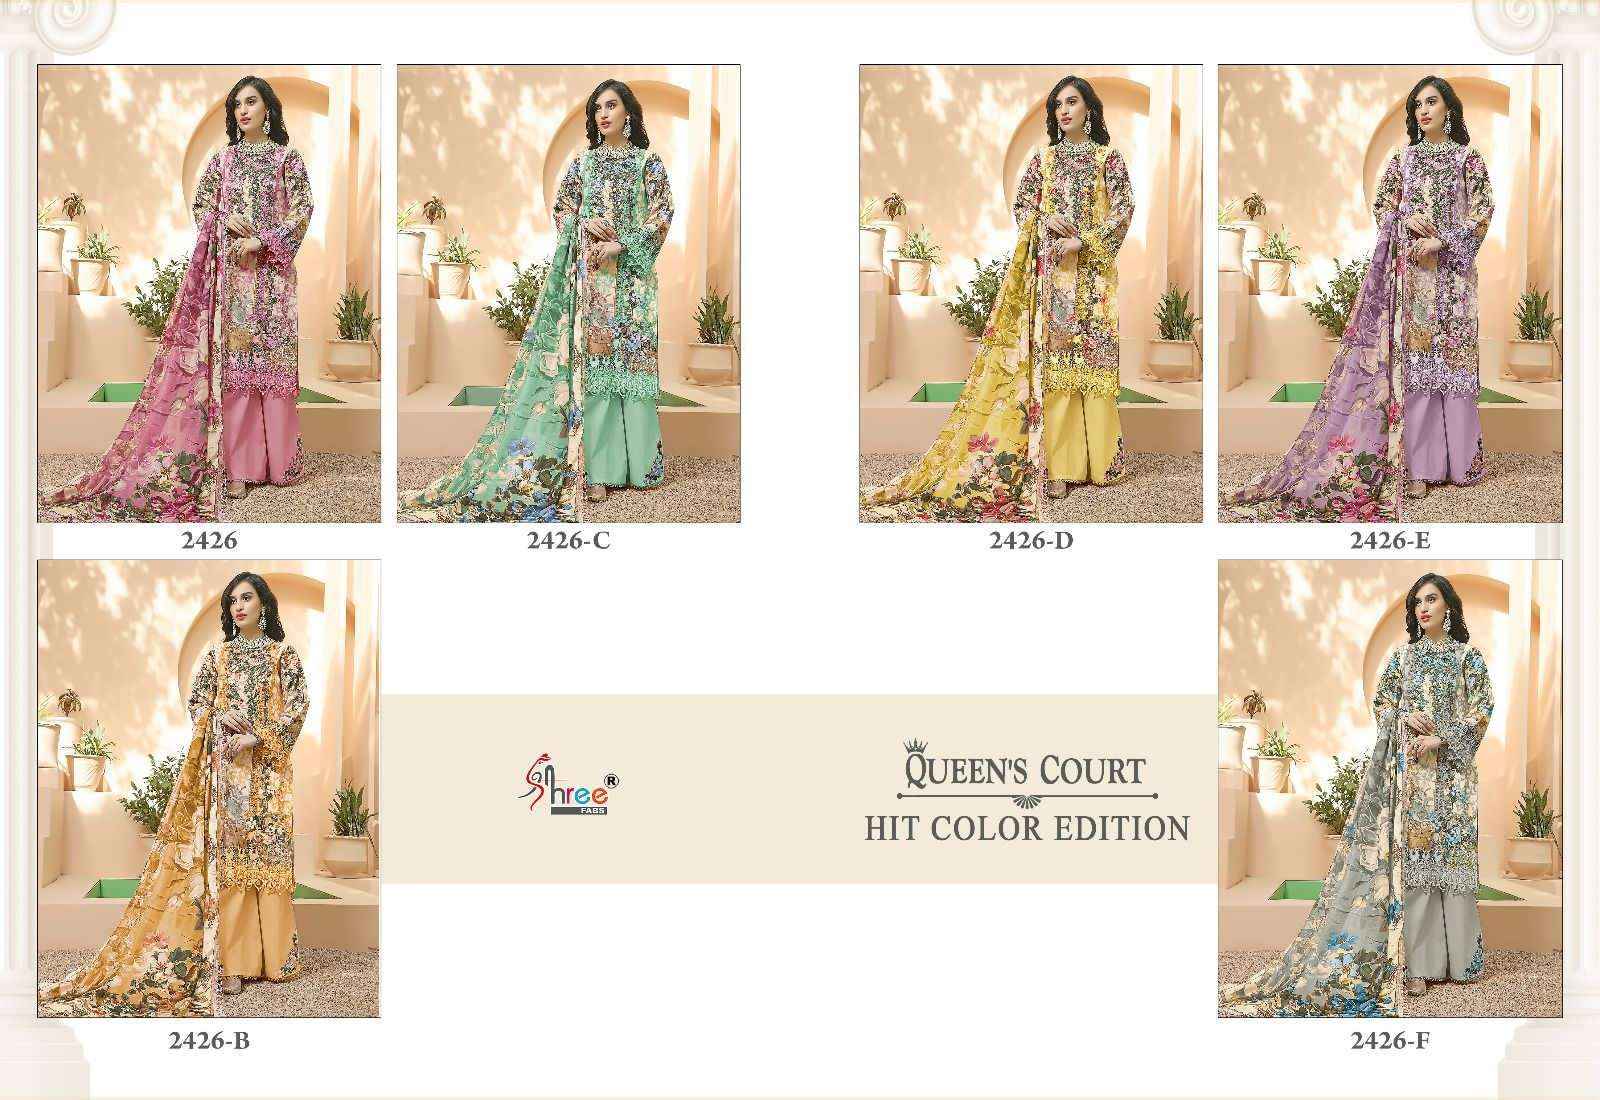 Shree Fabs Queens Court Hit Colour Edition Cotton Dress Material 6 pcs Catalogue